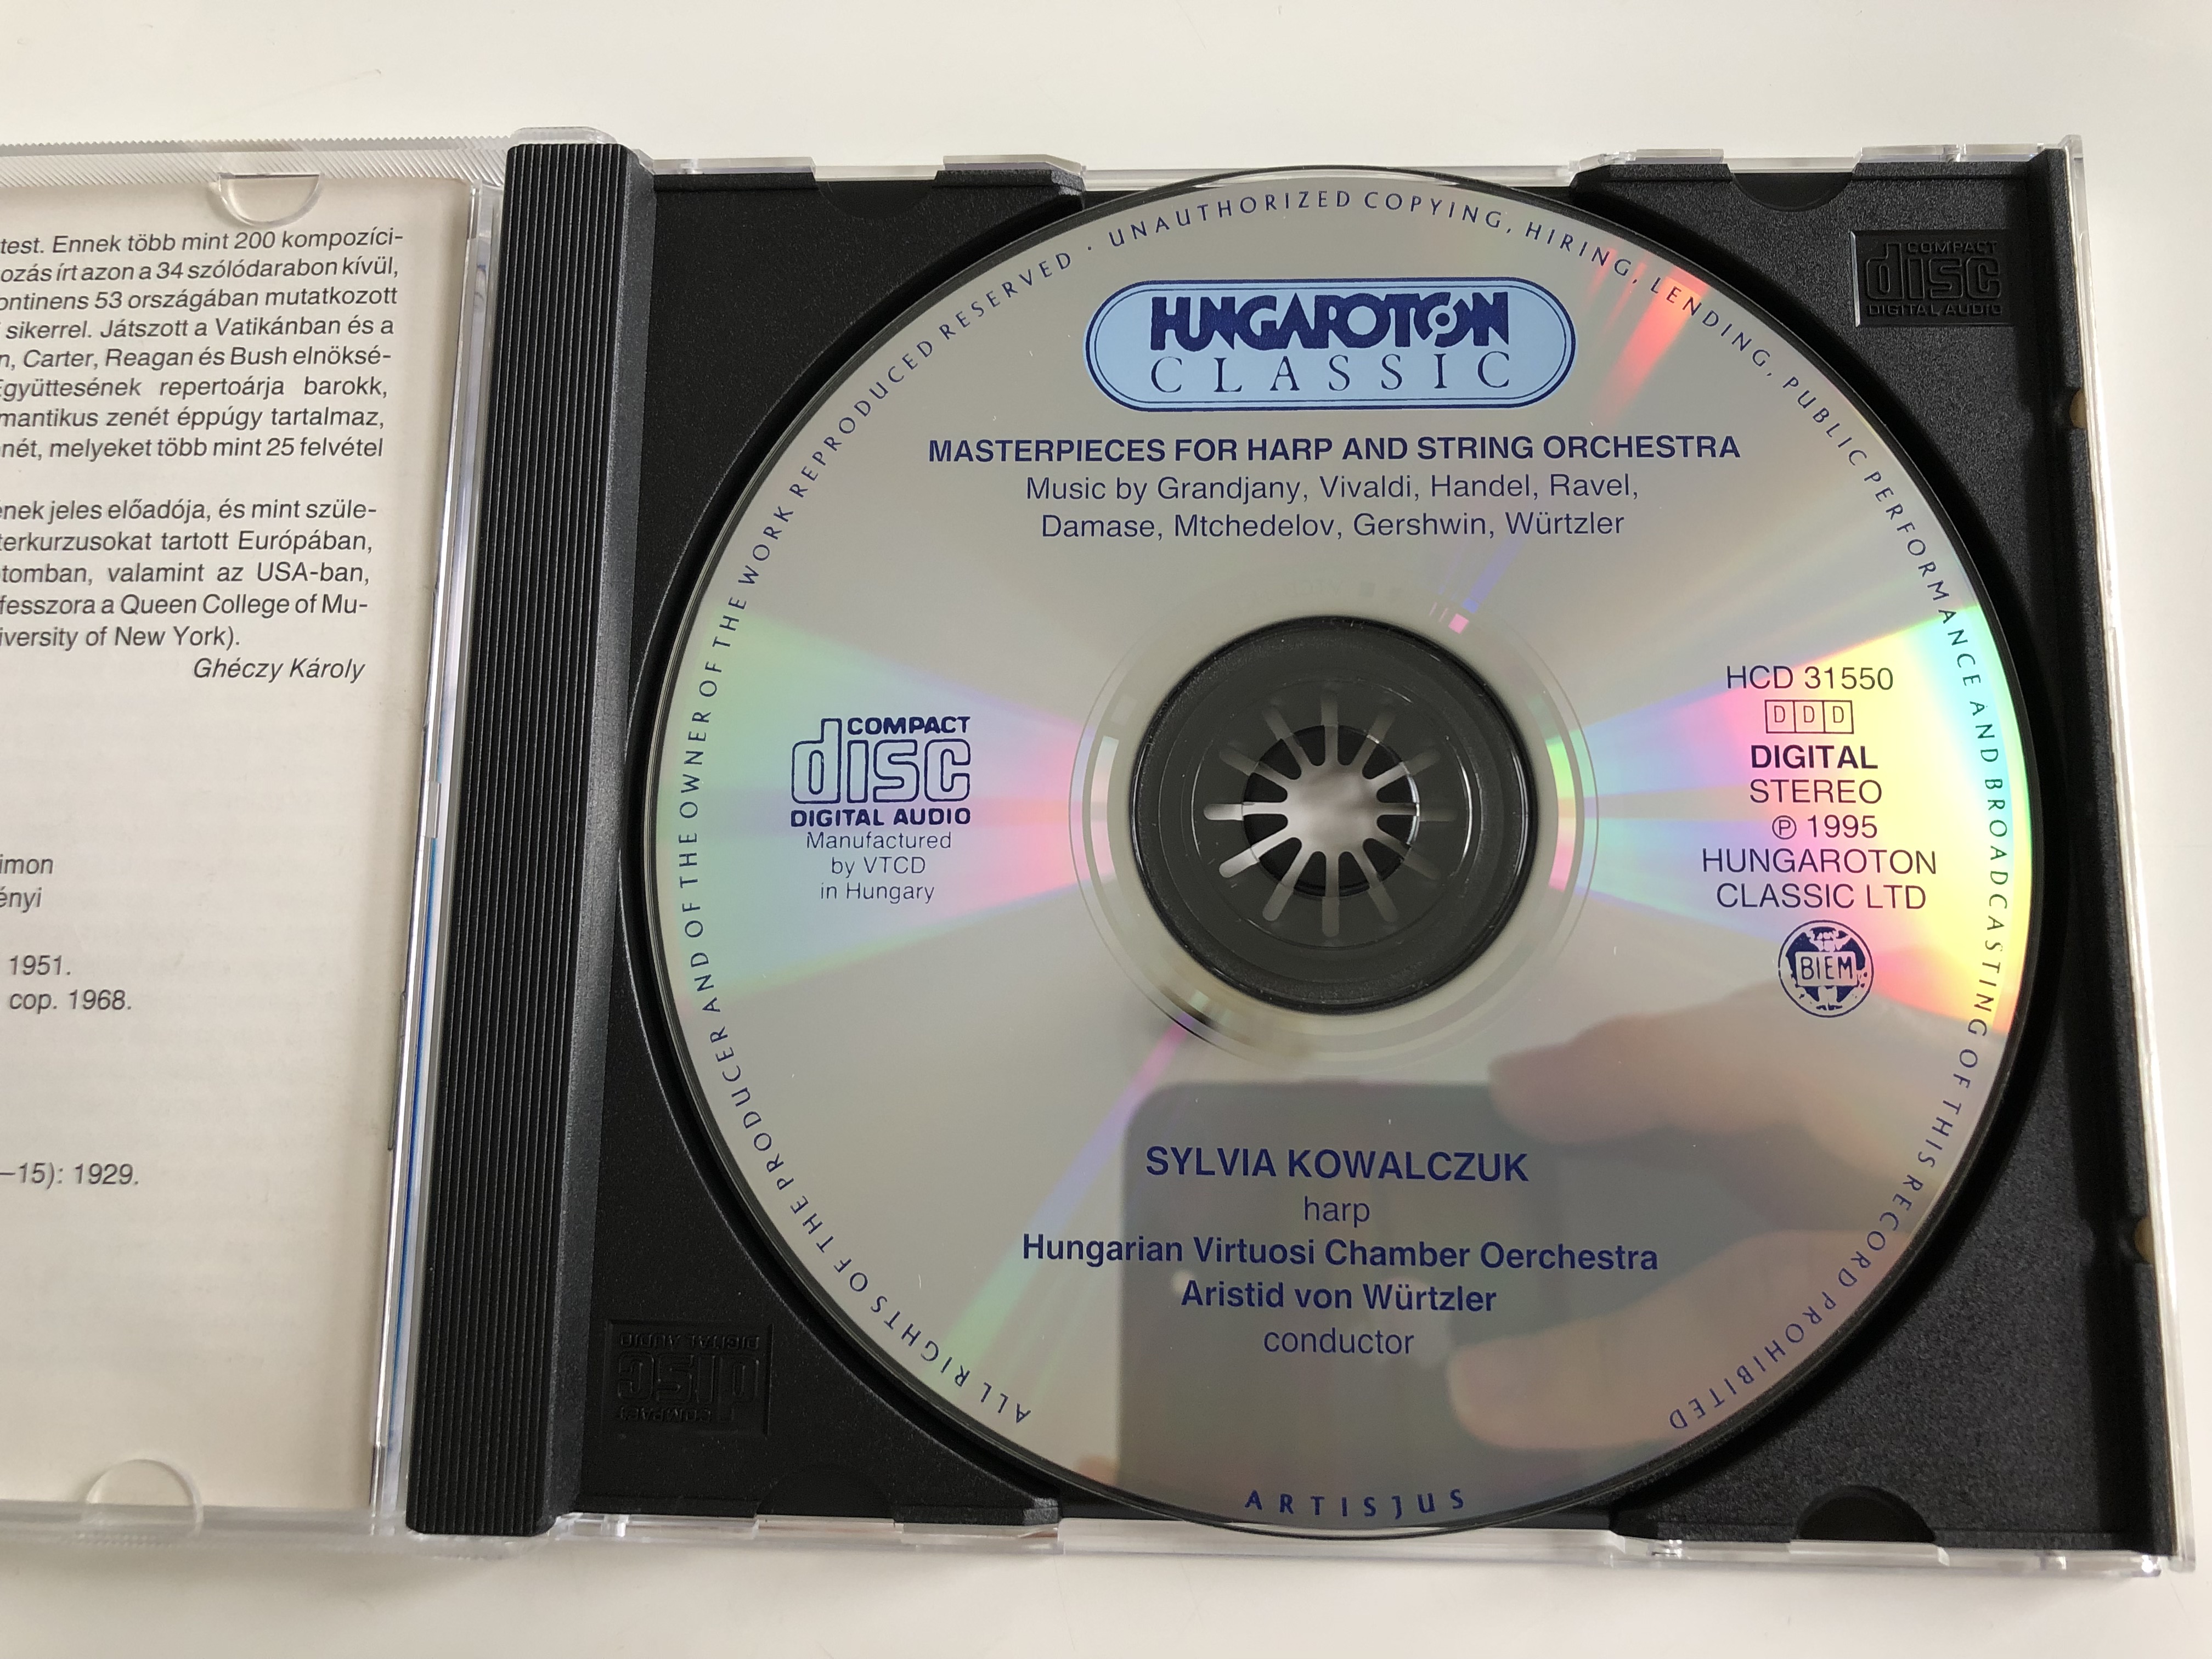 masterpieces-for-harp-and-orchestra-vivaldi-handel-ravel-gershwin-sylvia-kowalszuk-hungarian-virtuosi-aristid-von-wurtzler-hungaroton-audio-cd-31550-stereo-hcd-31550-6-.jpg